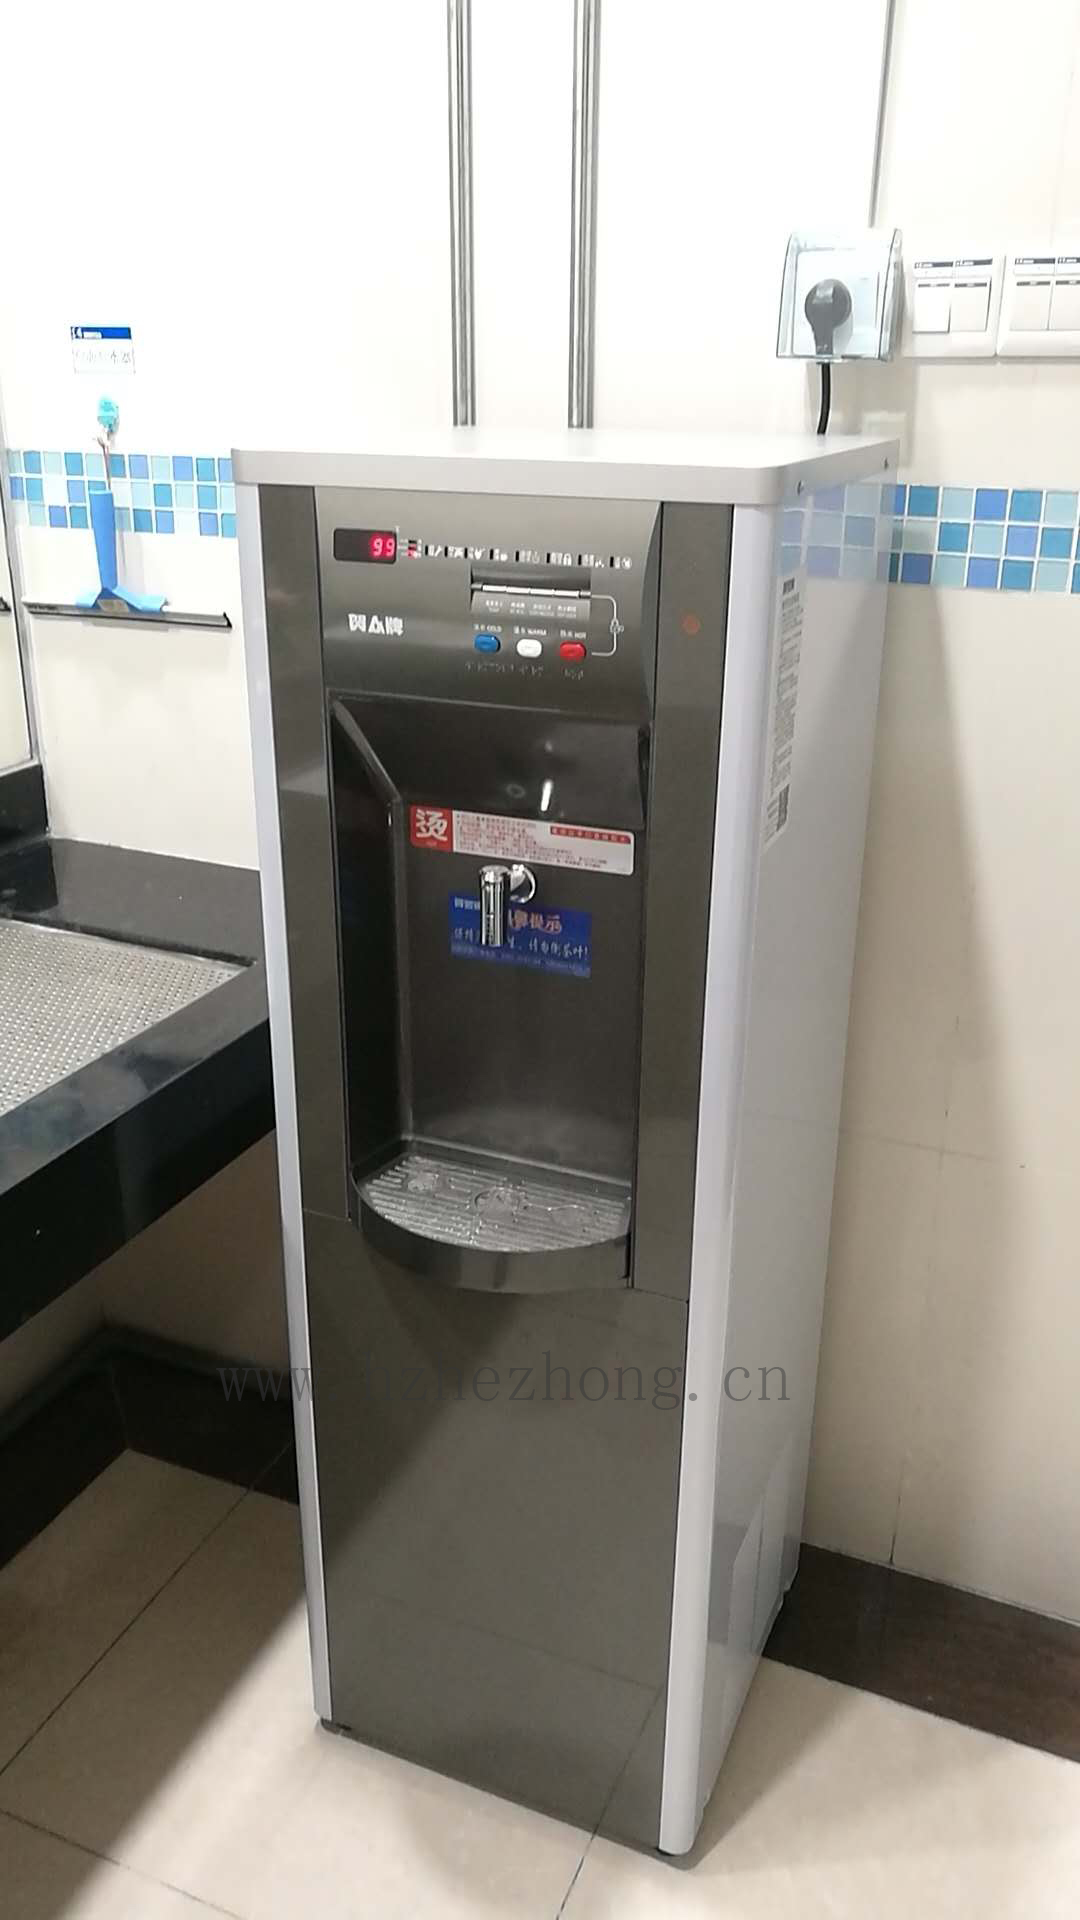 ACUO brand water dispenser entered Dongfeng Honda Engine Co., LTD